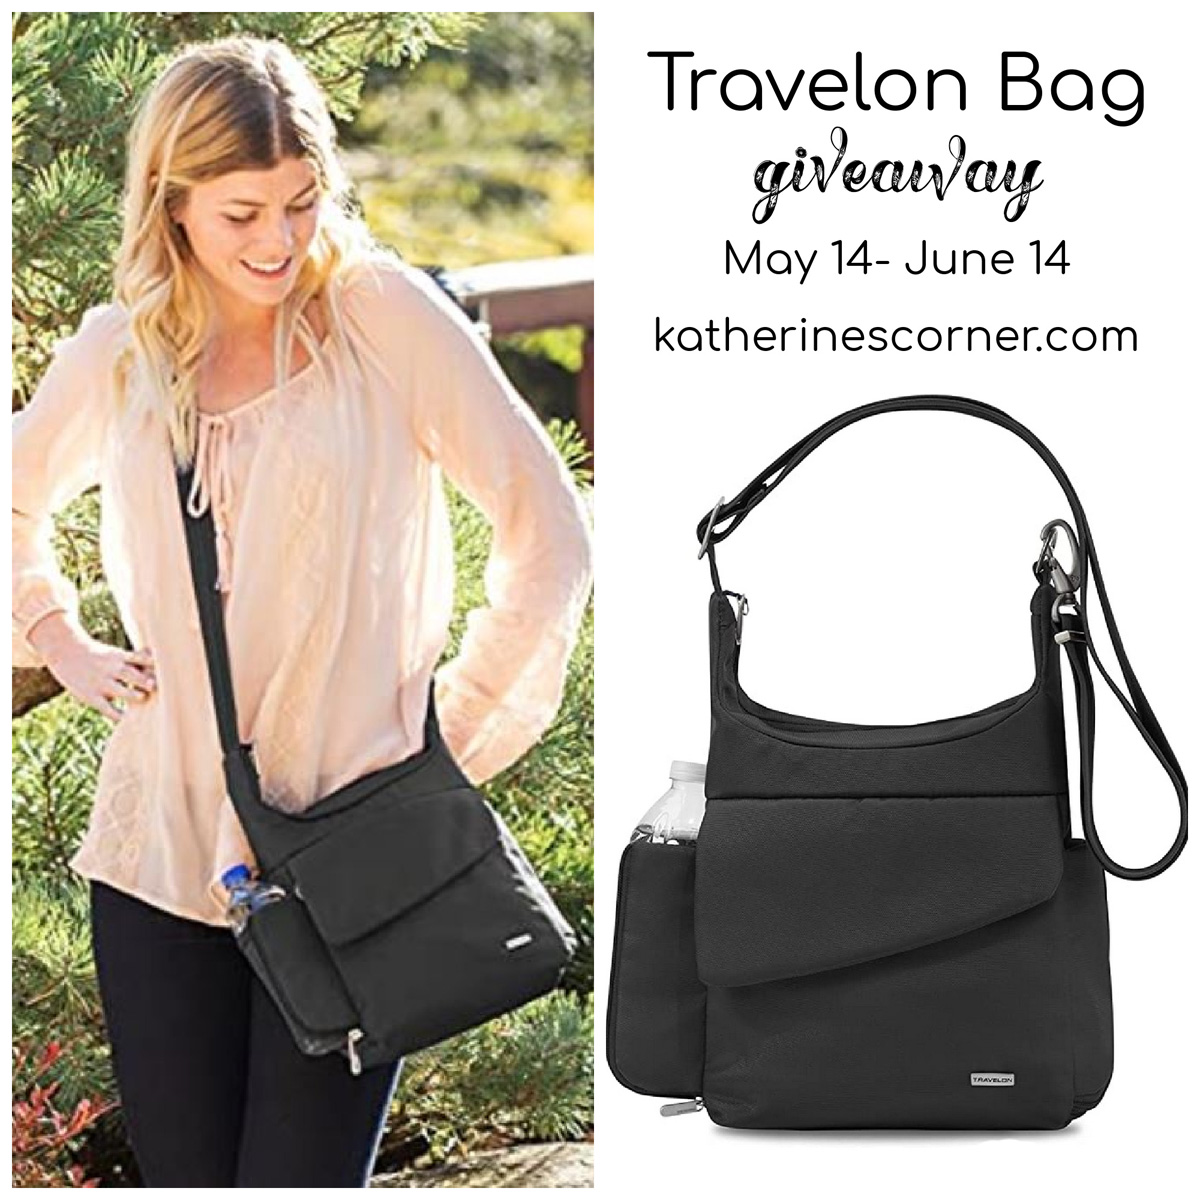 Travel Bag Giveaway